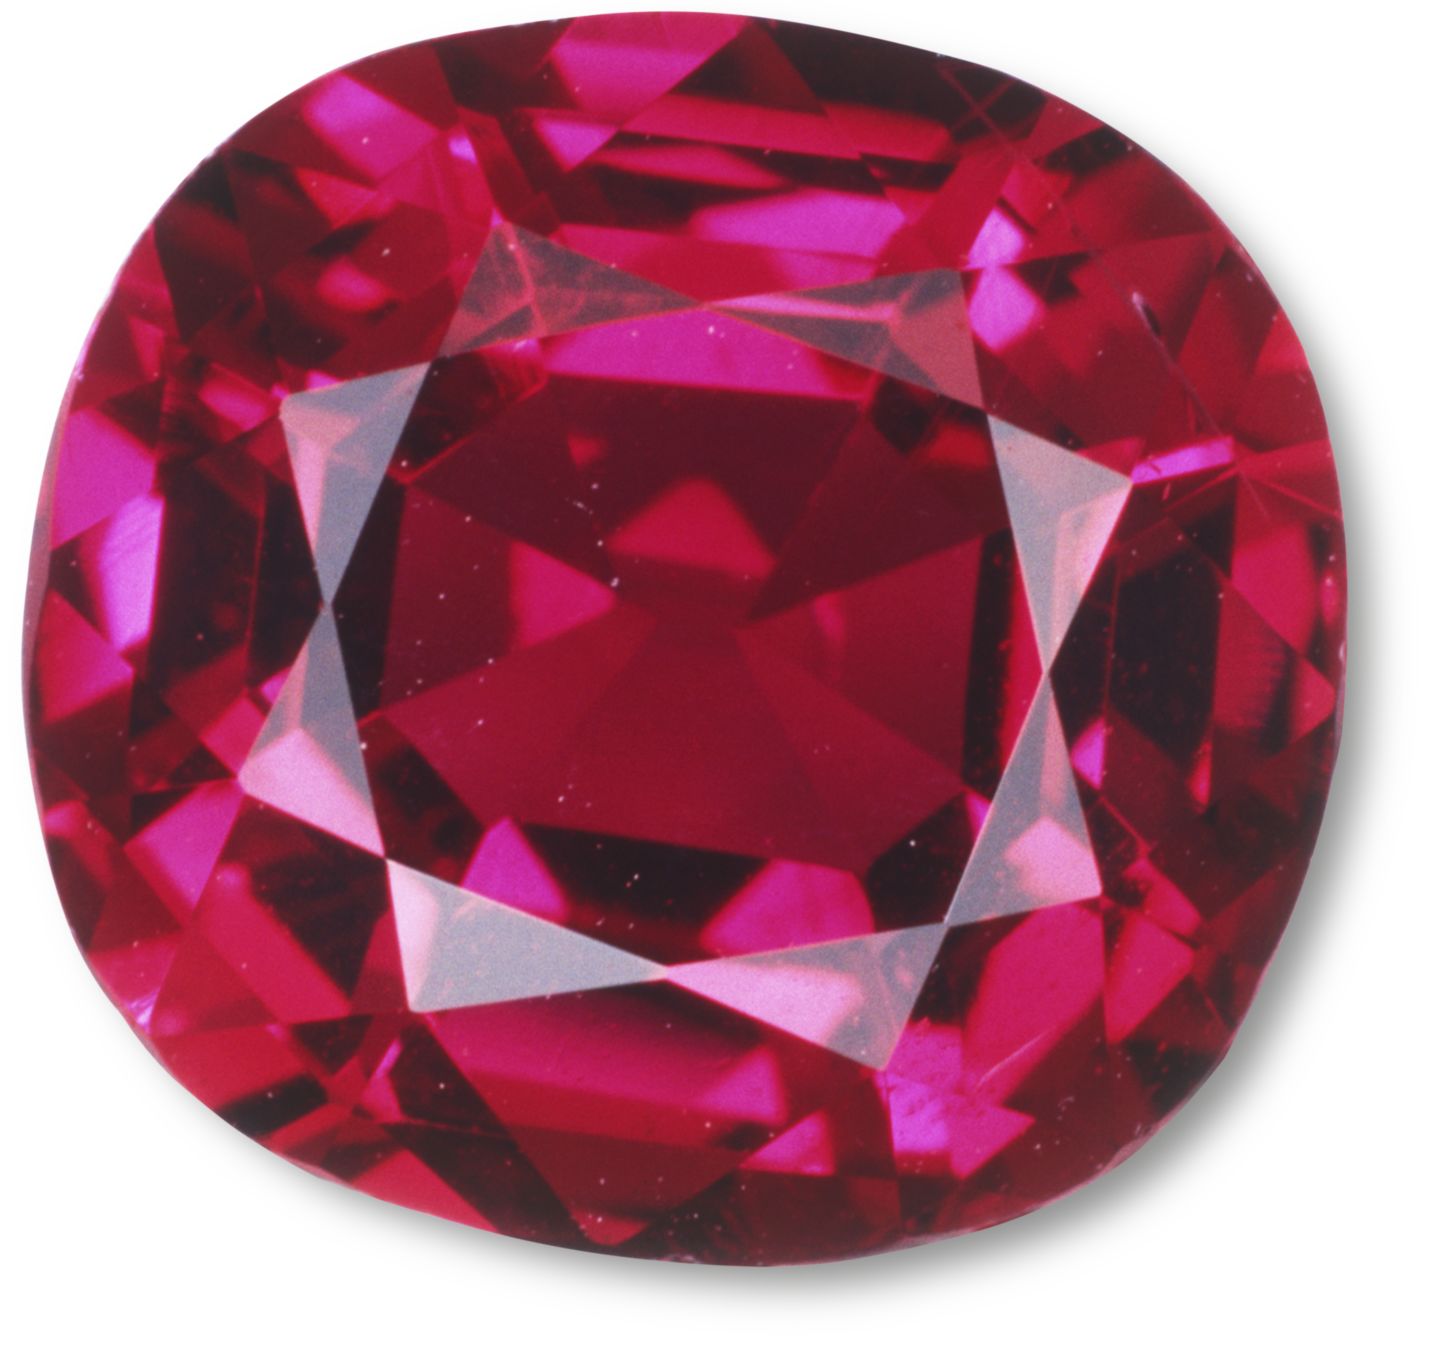 Precious Gemstones | Types of Gemstone | DK Find Out